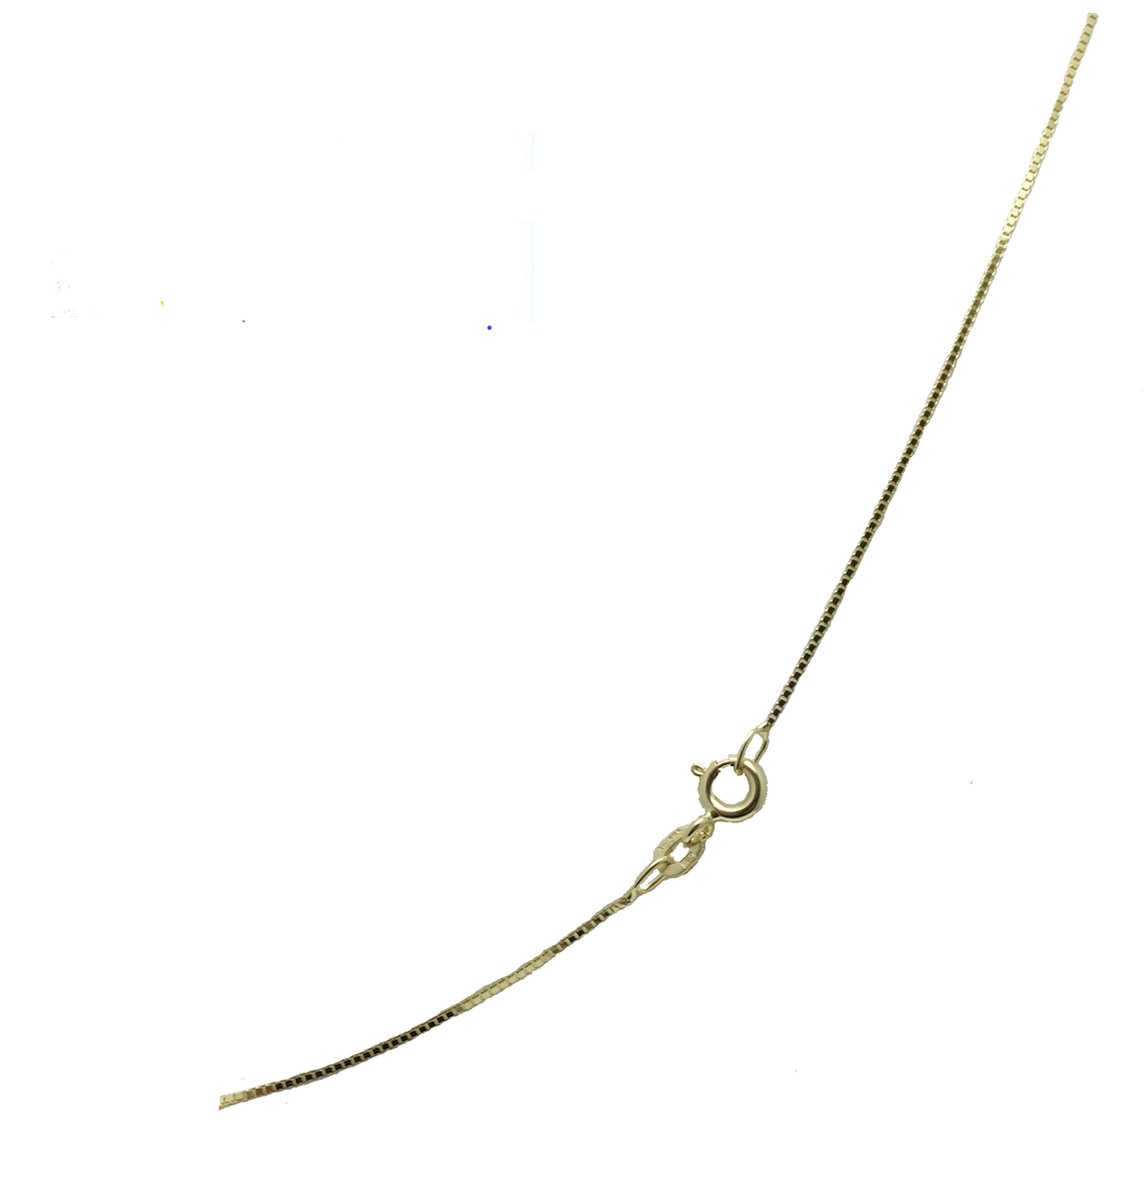 Ketting - venetiaans - geel goud - 50 cm – 2.4 gram - 0.8 mm breed – 14 karaat - verlinden juwelier